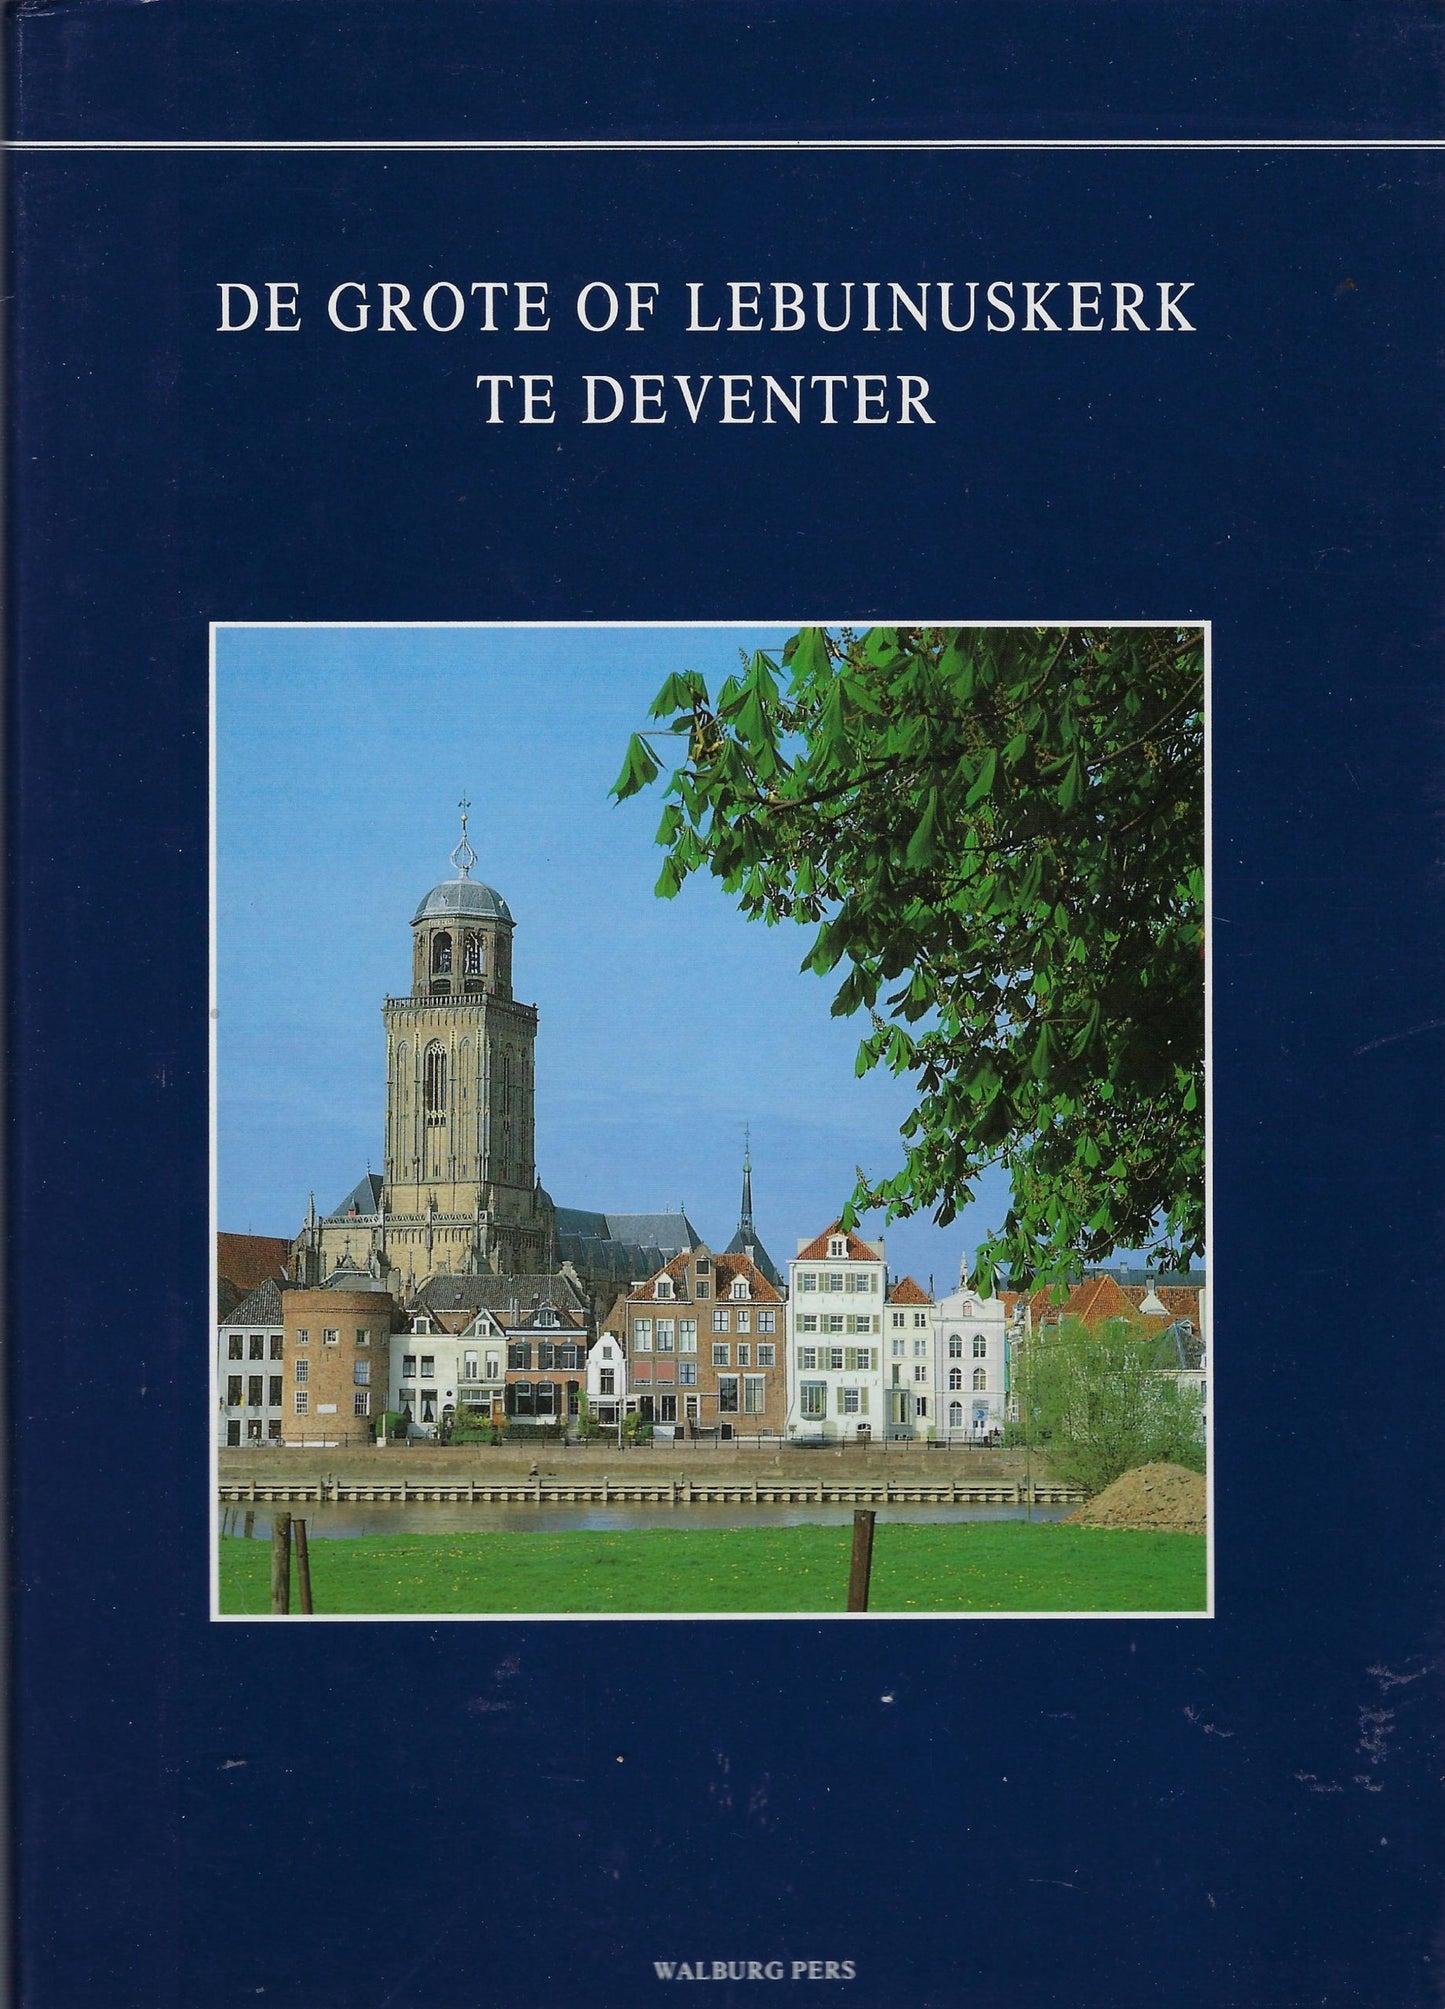 De grote of Lebuinuskerk te Deventer